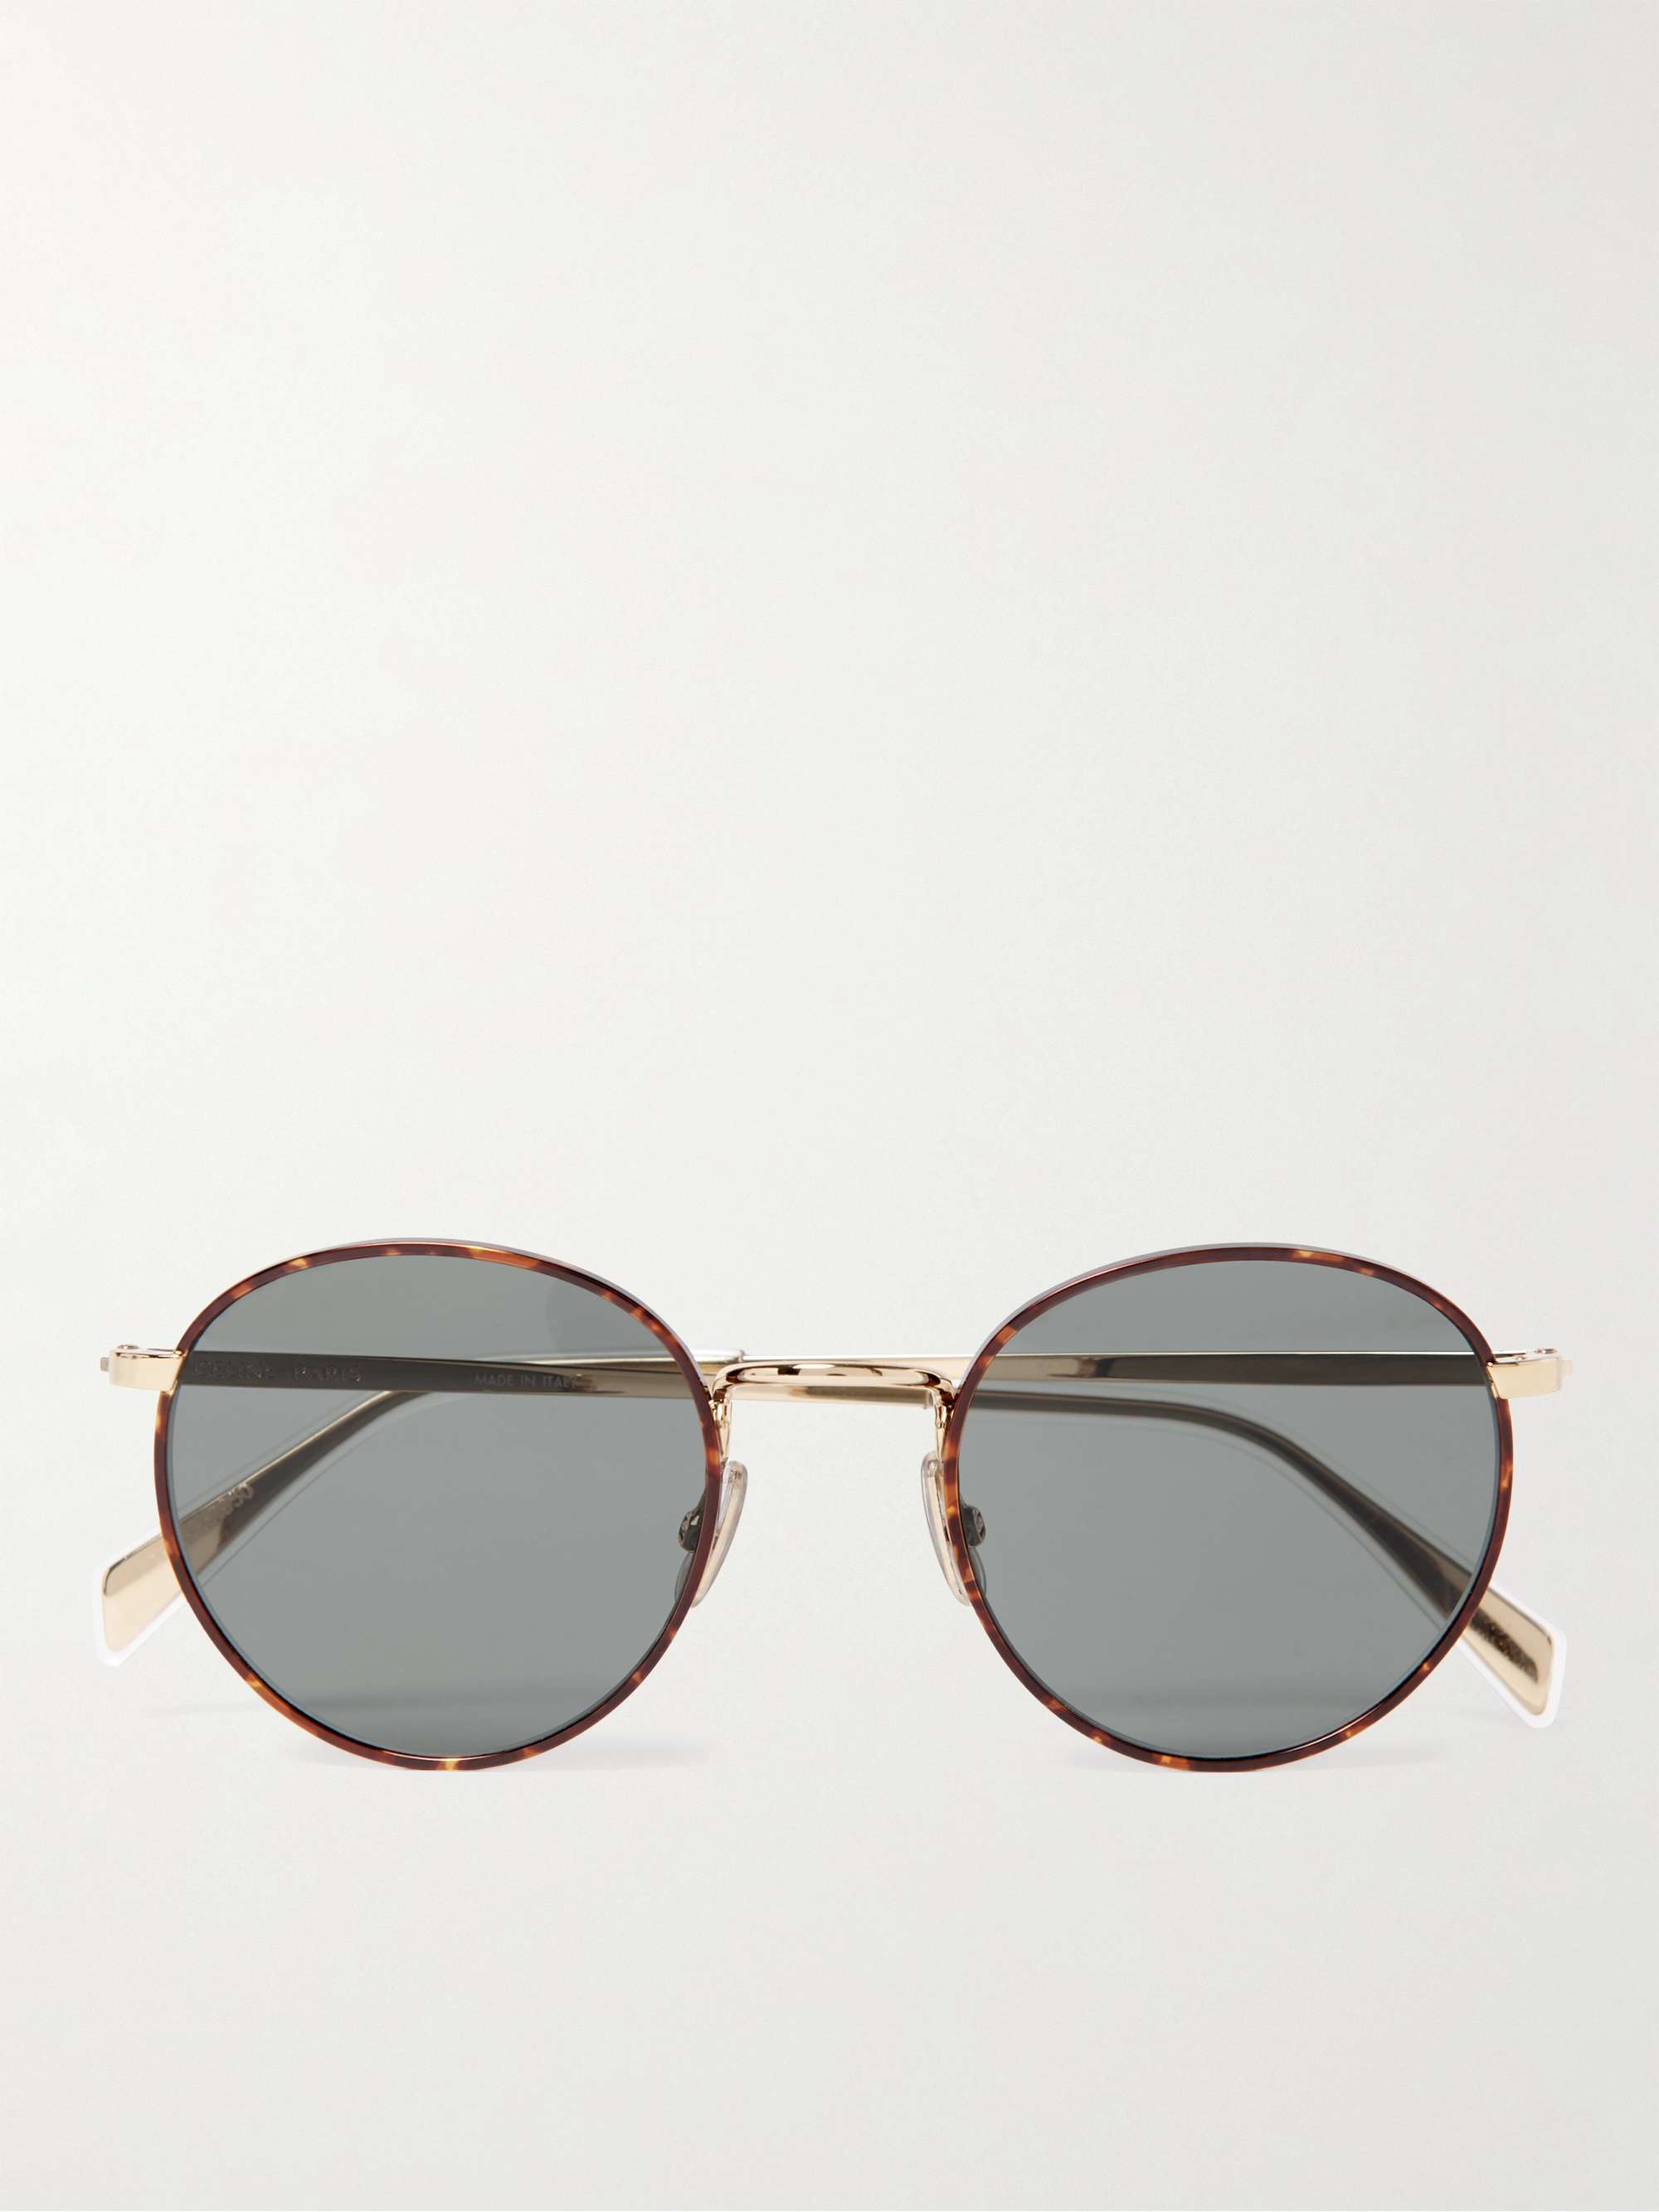 CELINE HOMME Round-Frame Tortoiseshell Acetate and Gold-Tone Sunglasses